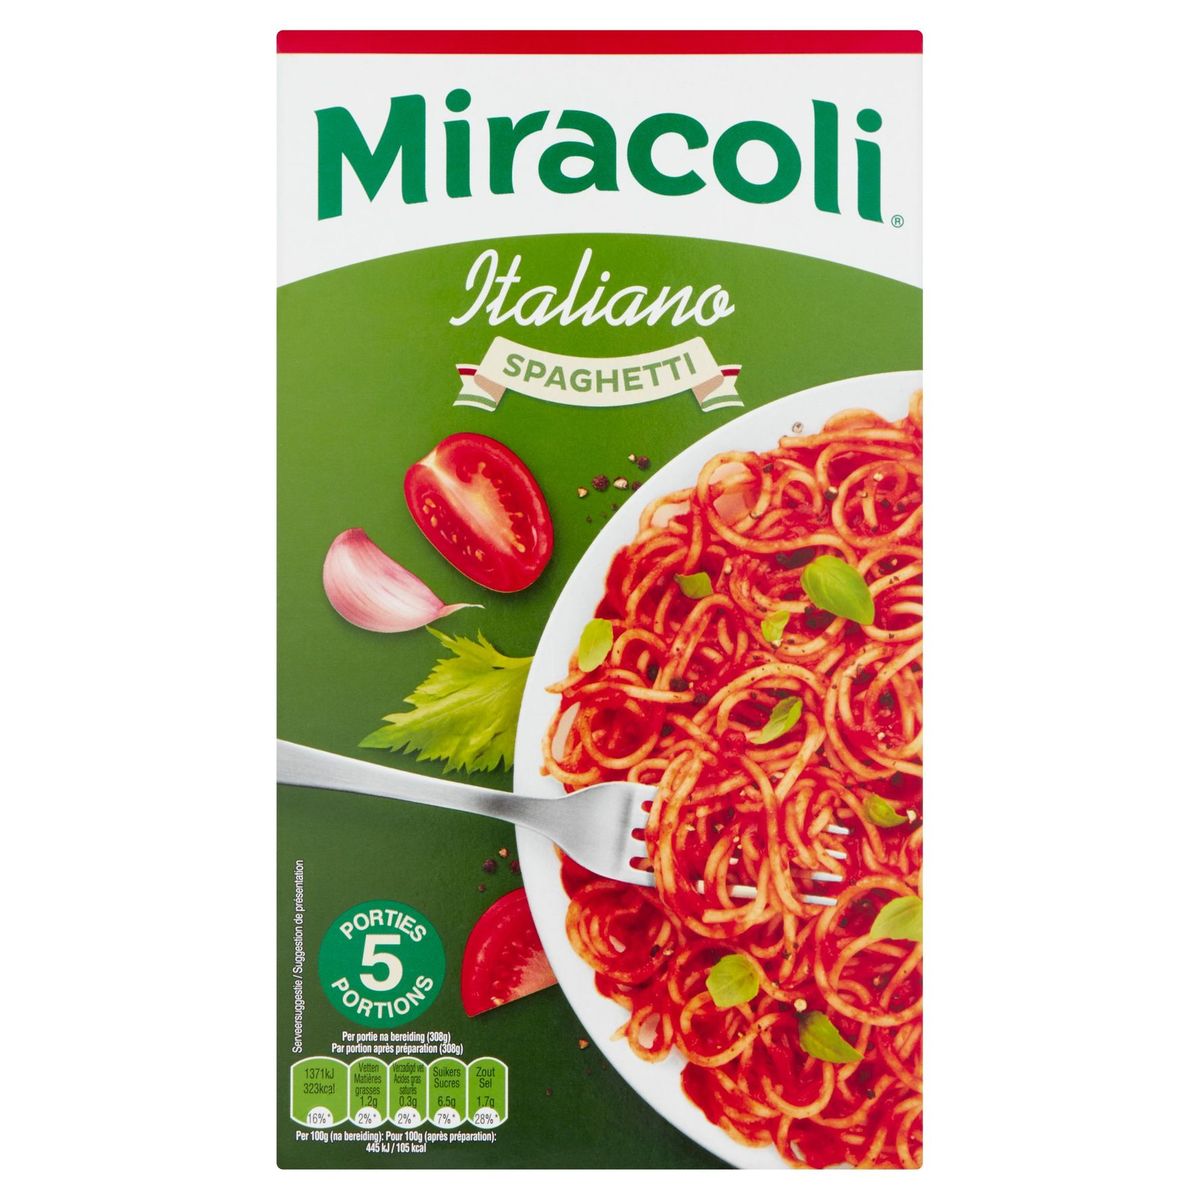 Miracoli Spaghetti Italiano 616 g